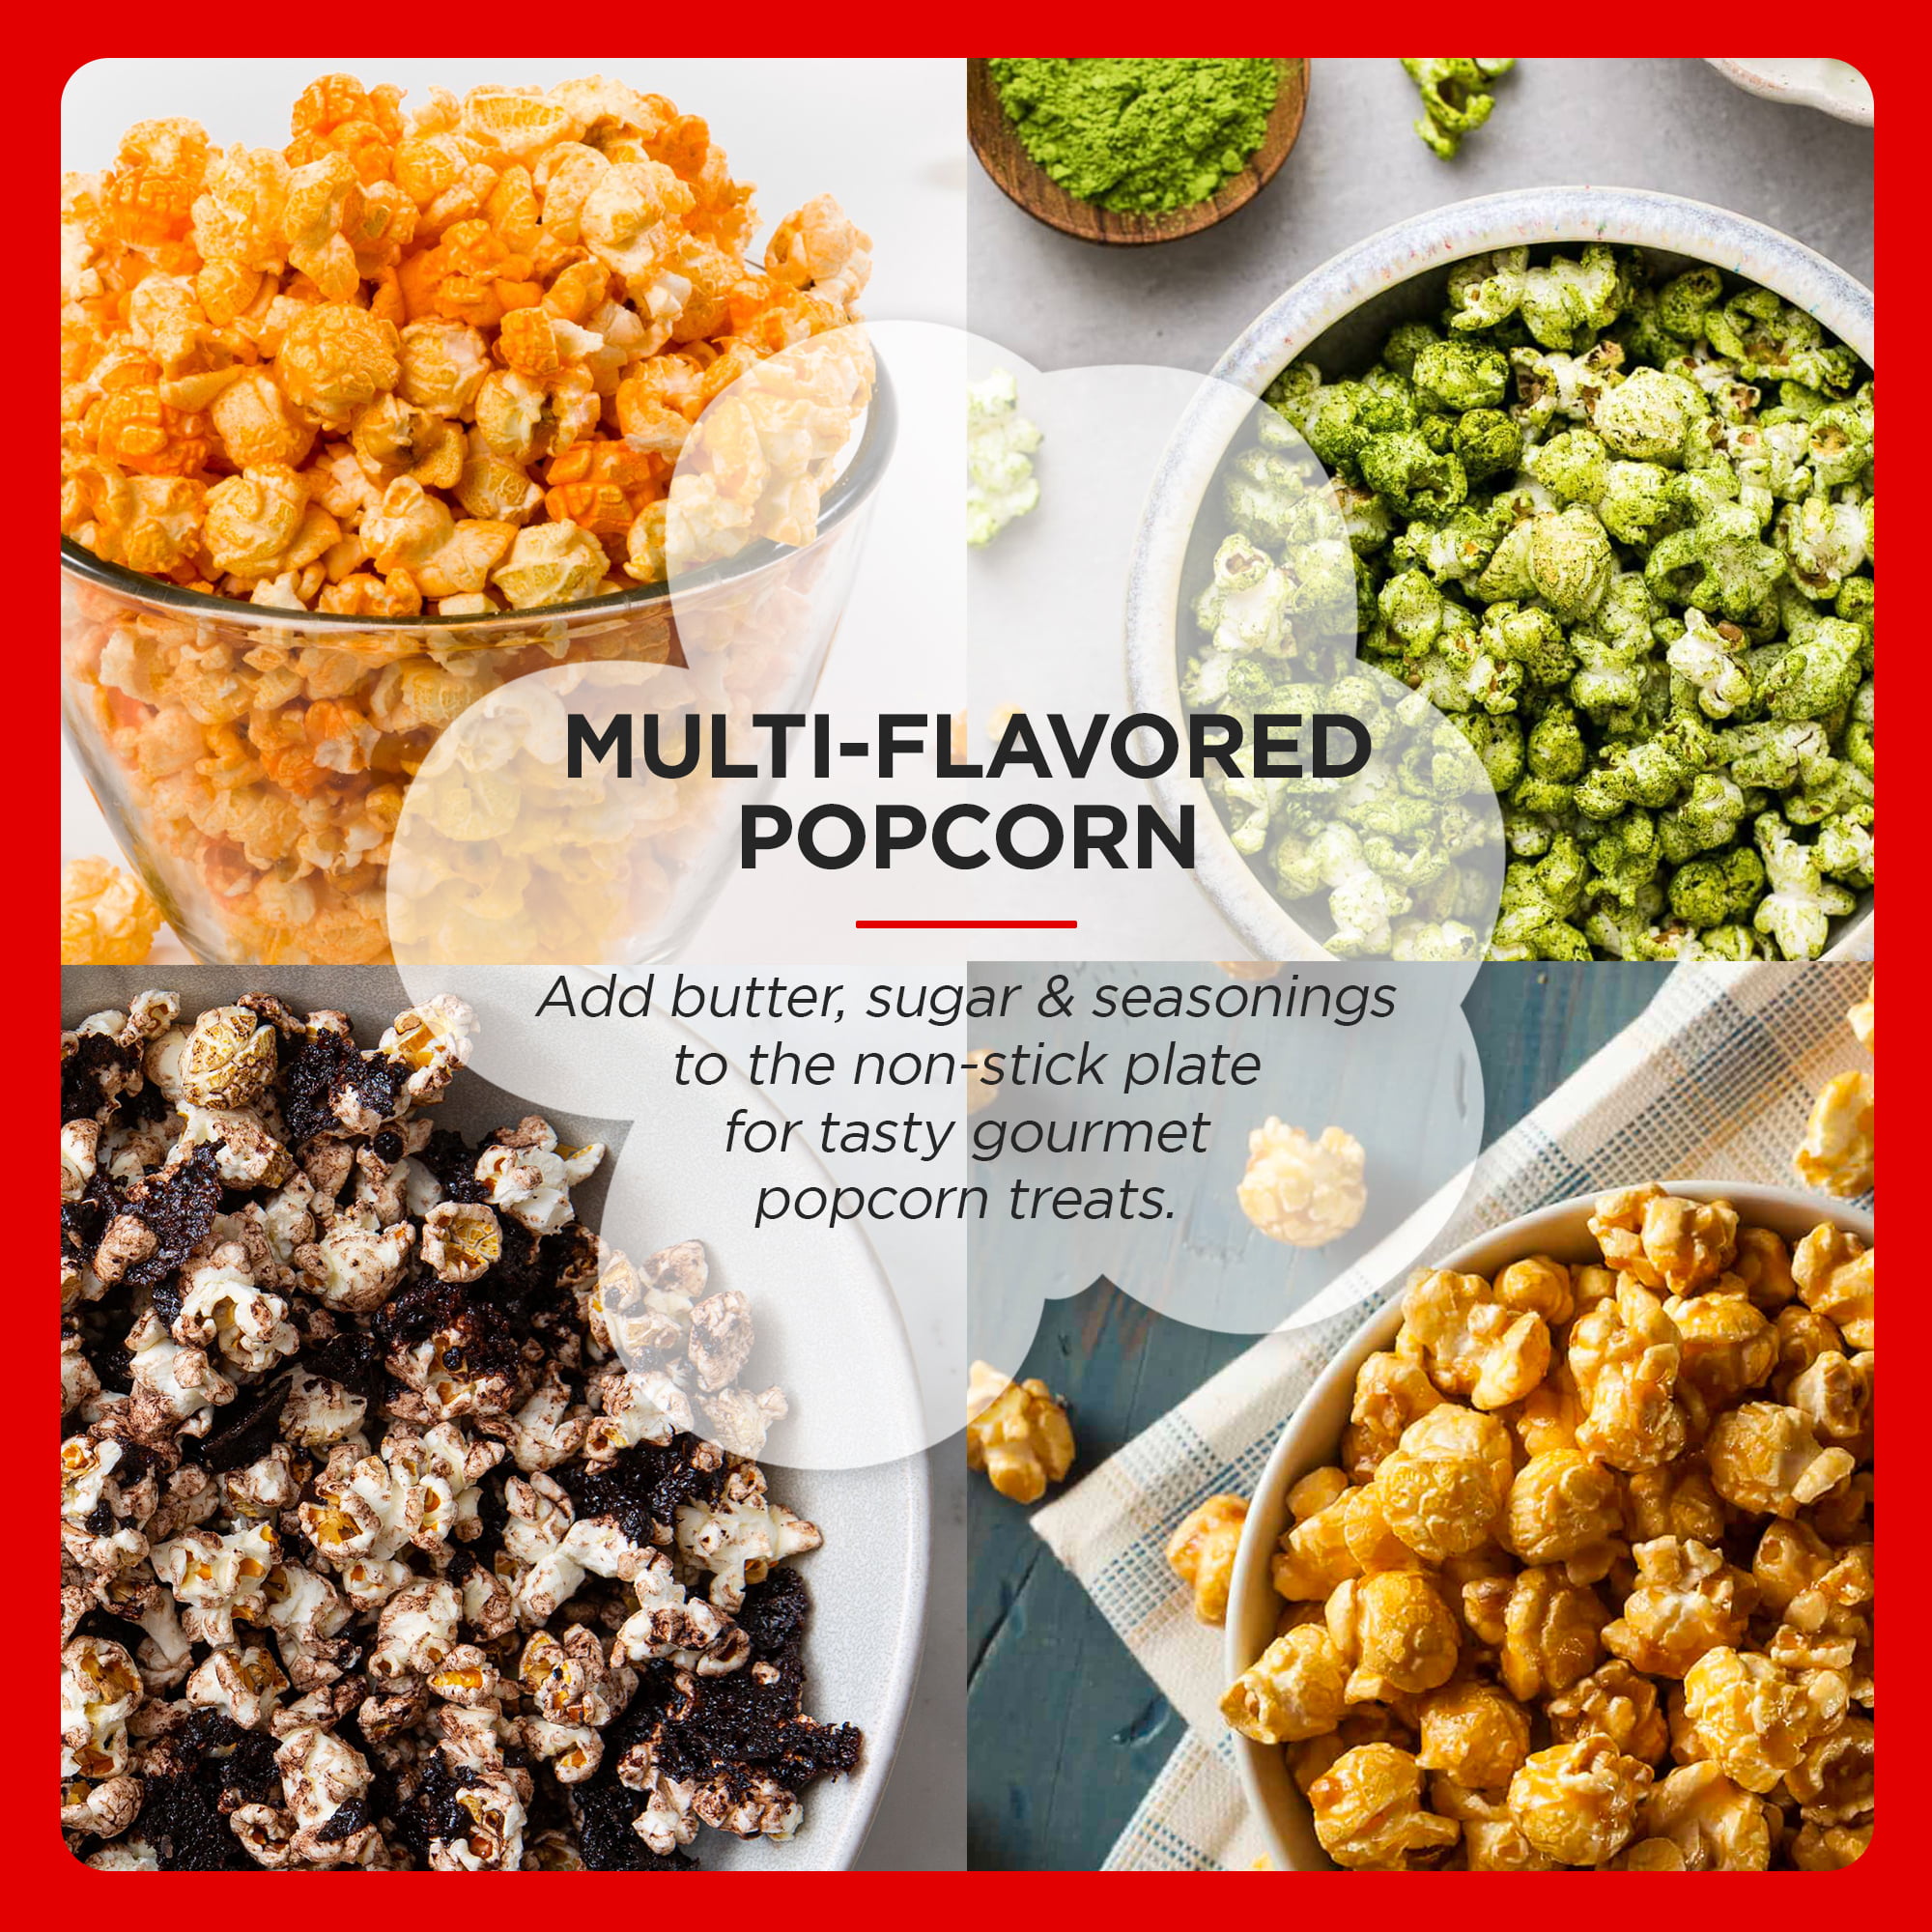 Elite Gourmet 3 Quart Popcorn Popper 